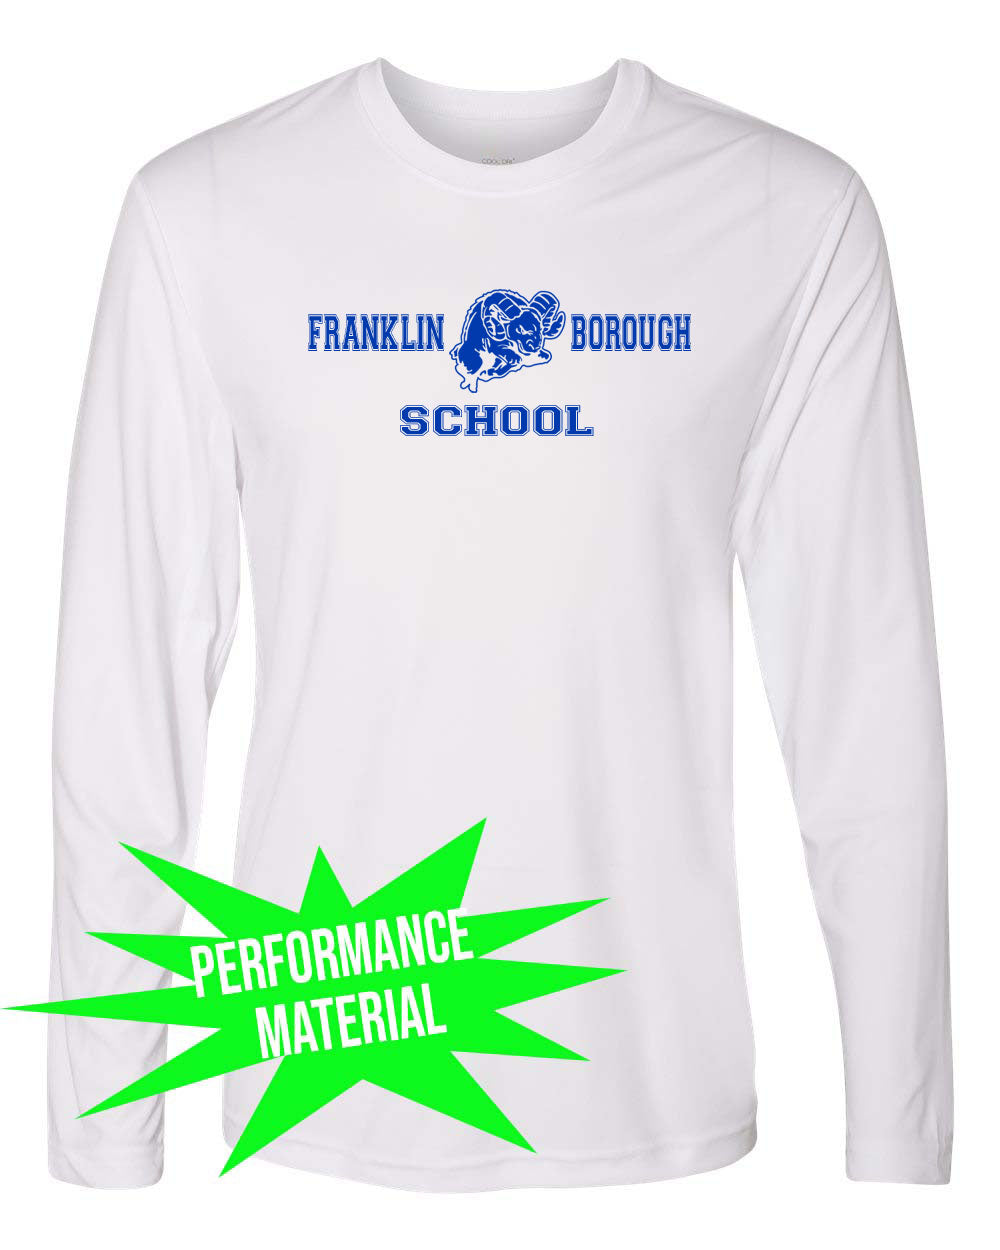 Franklin School Performance Material Design 3 Long Sleeve Shirt